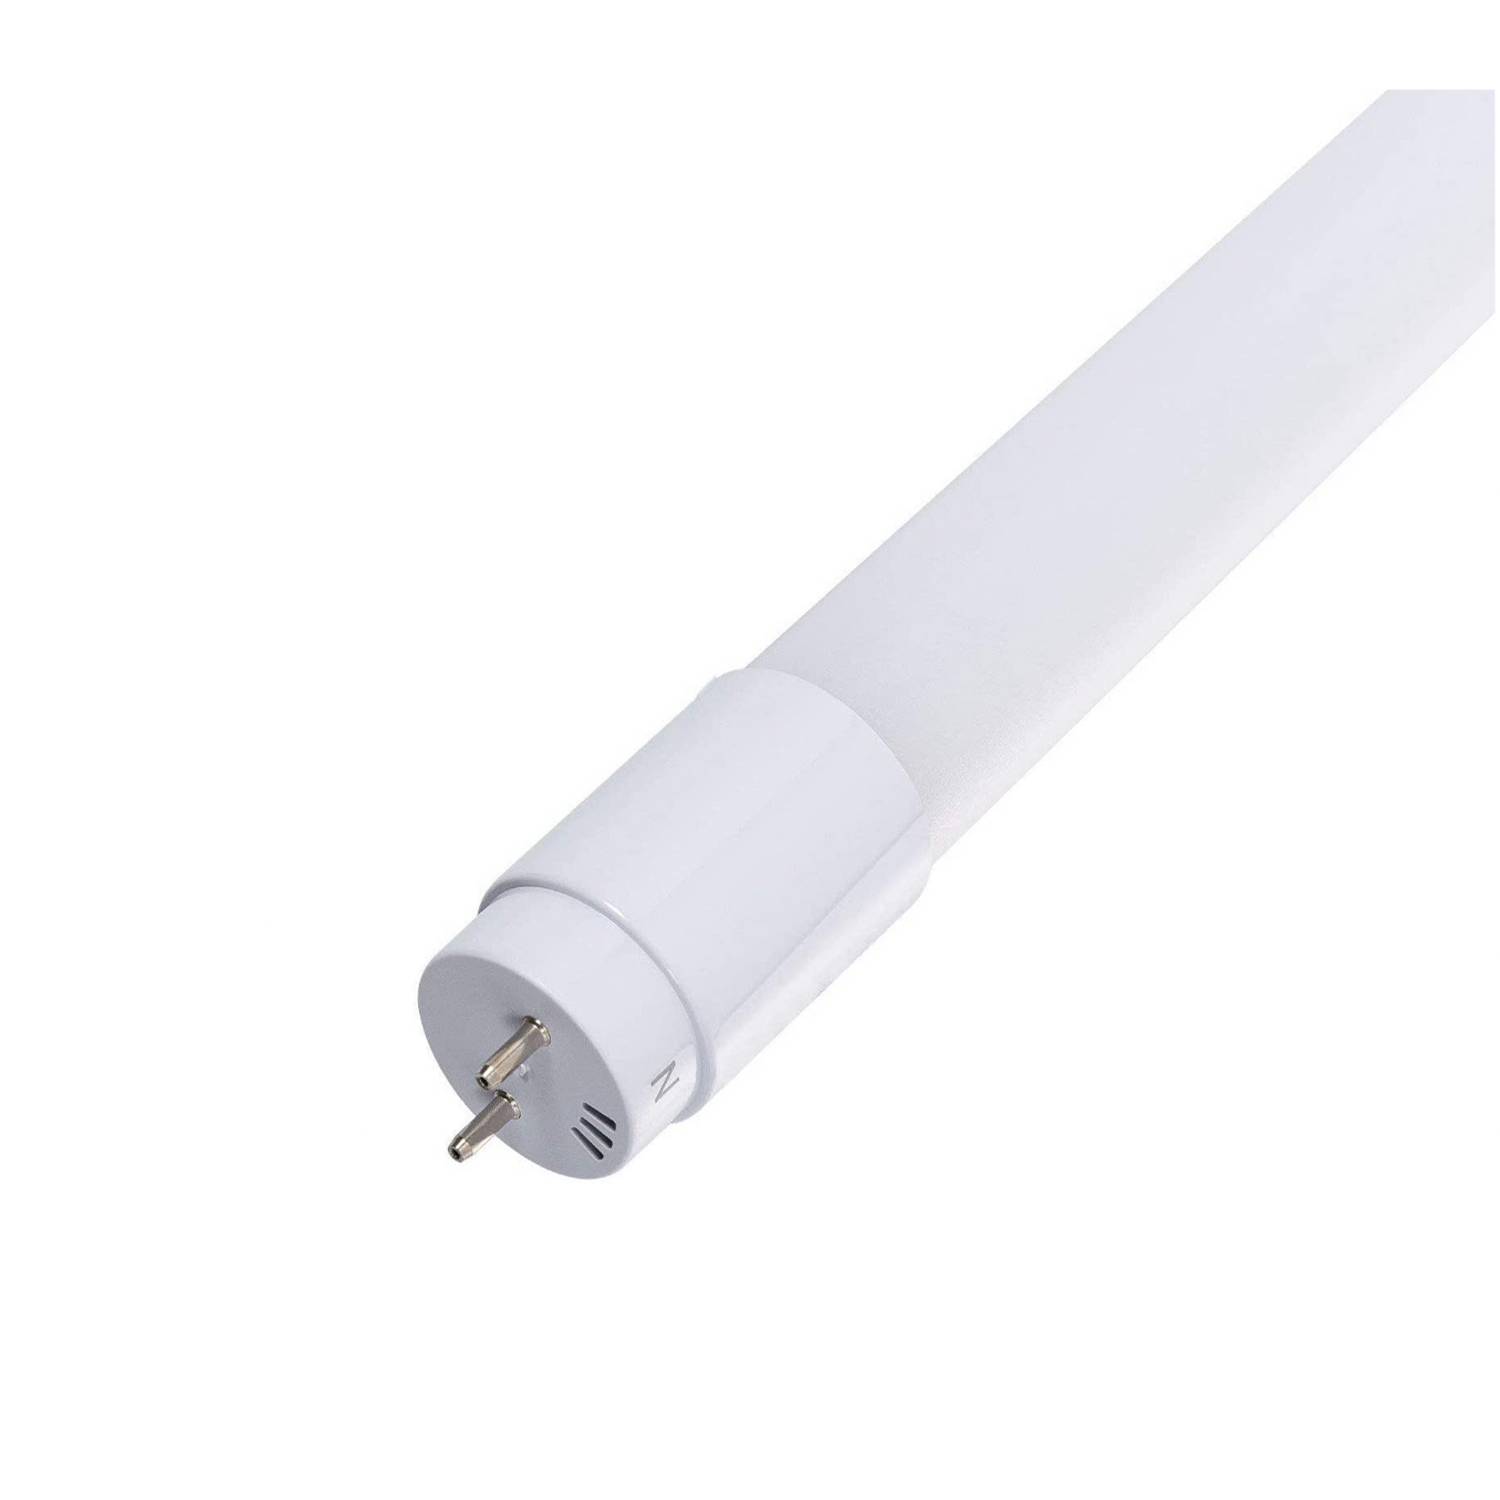 Teleurgesteld hand chirurg LED TL buis 60cm - 10W vervangt 18W - 4000K (840) helder wit licht -  Ledlichtdiscounter.nl